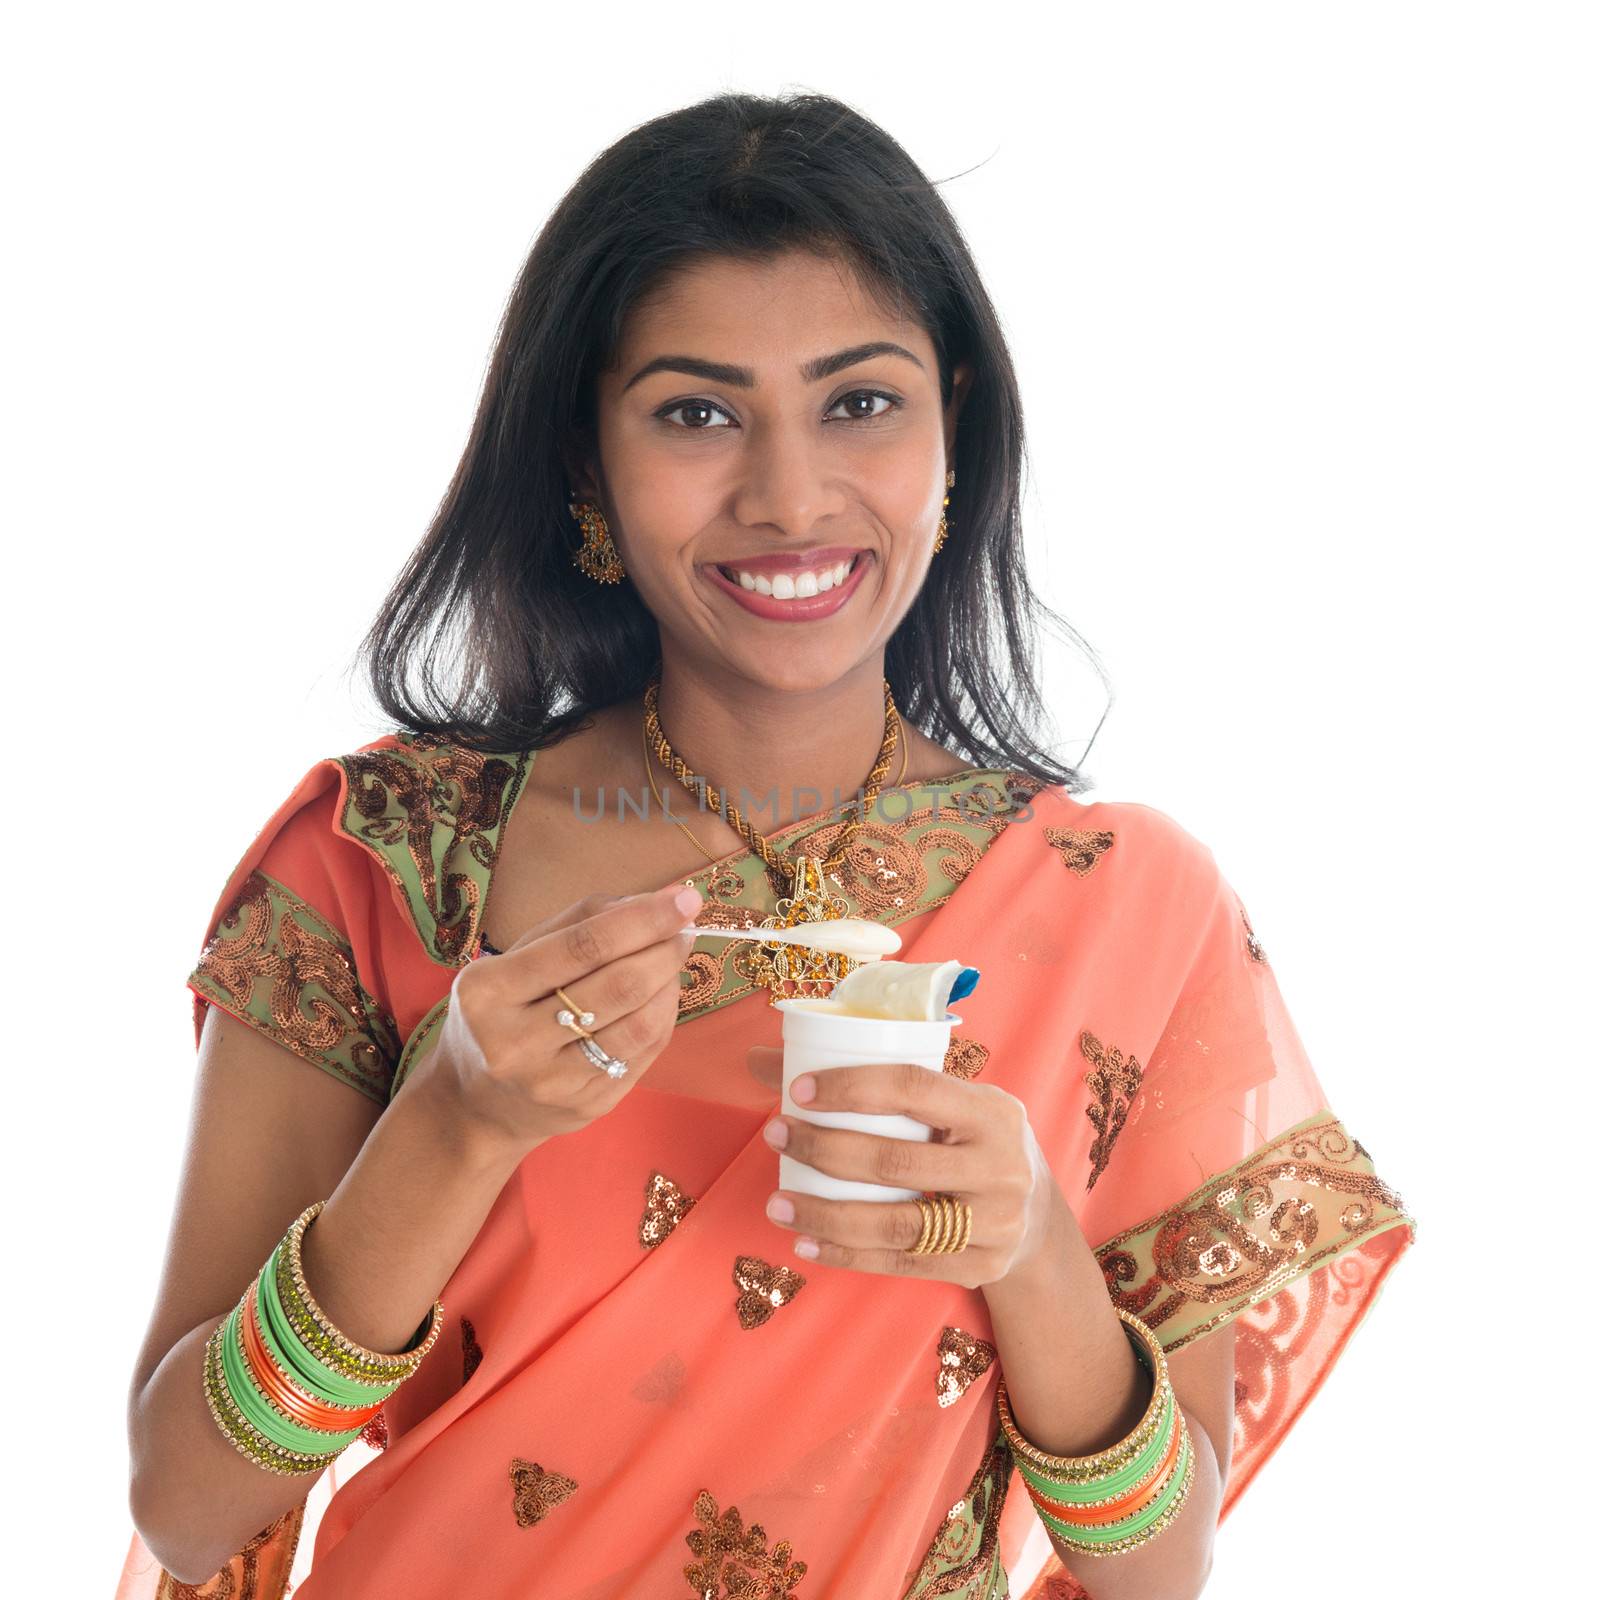 Traditional Indian woman eating yogurt by szefei